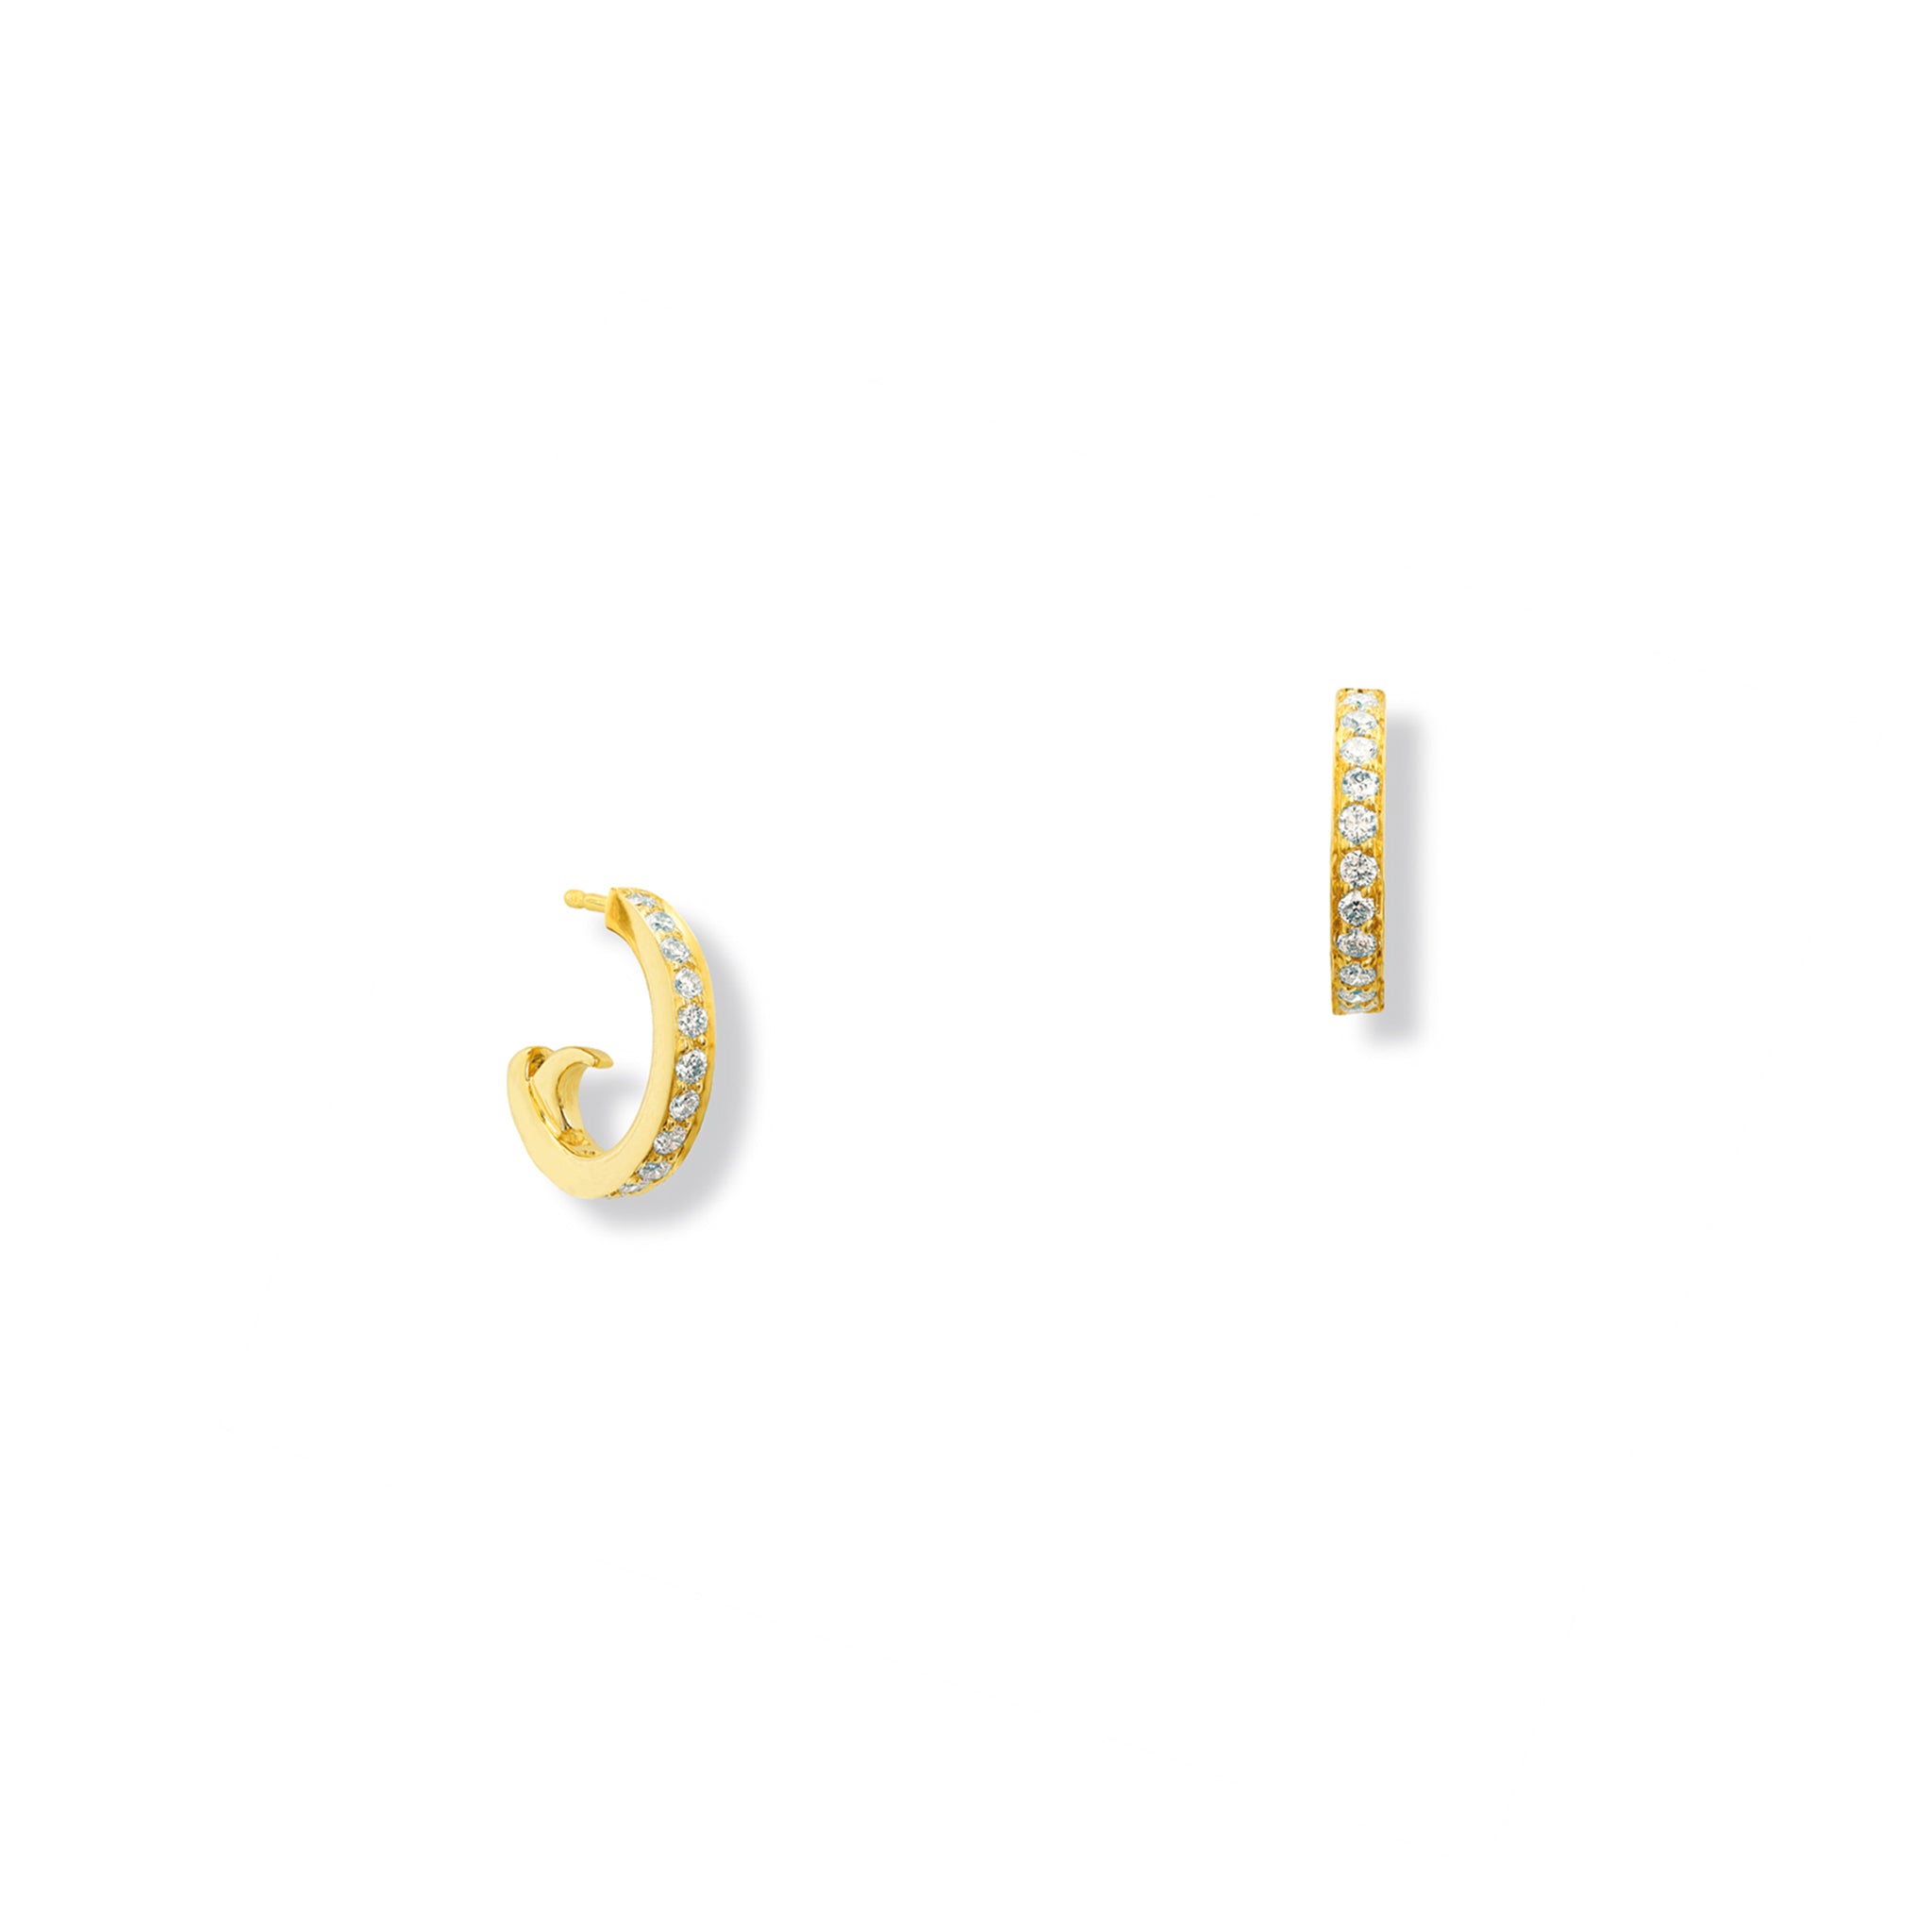 Astrea Hoop Earrings 18ct Yellow Gold - Diamond Pav�